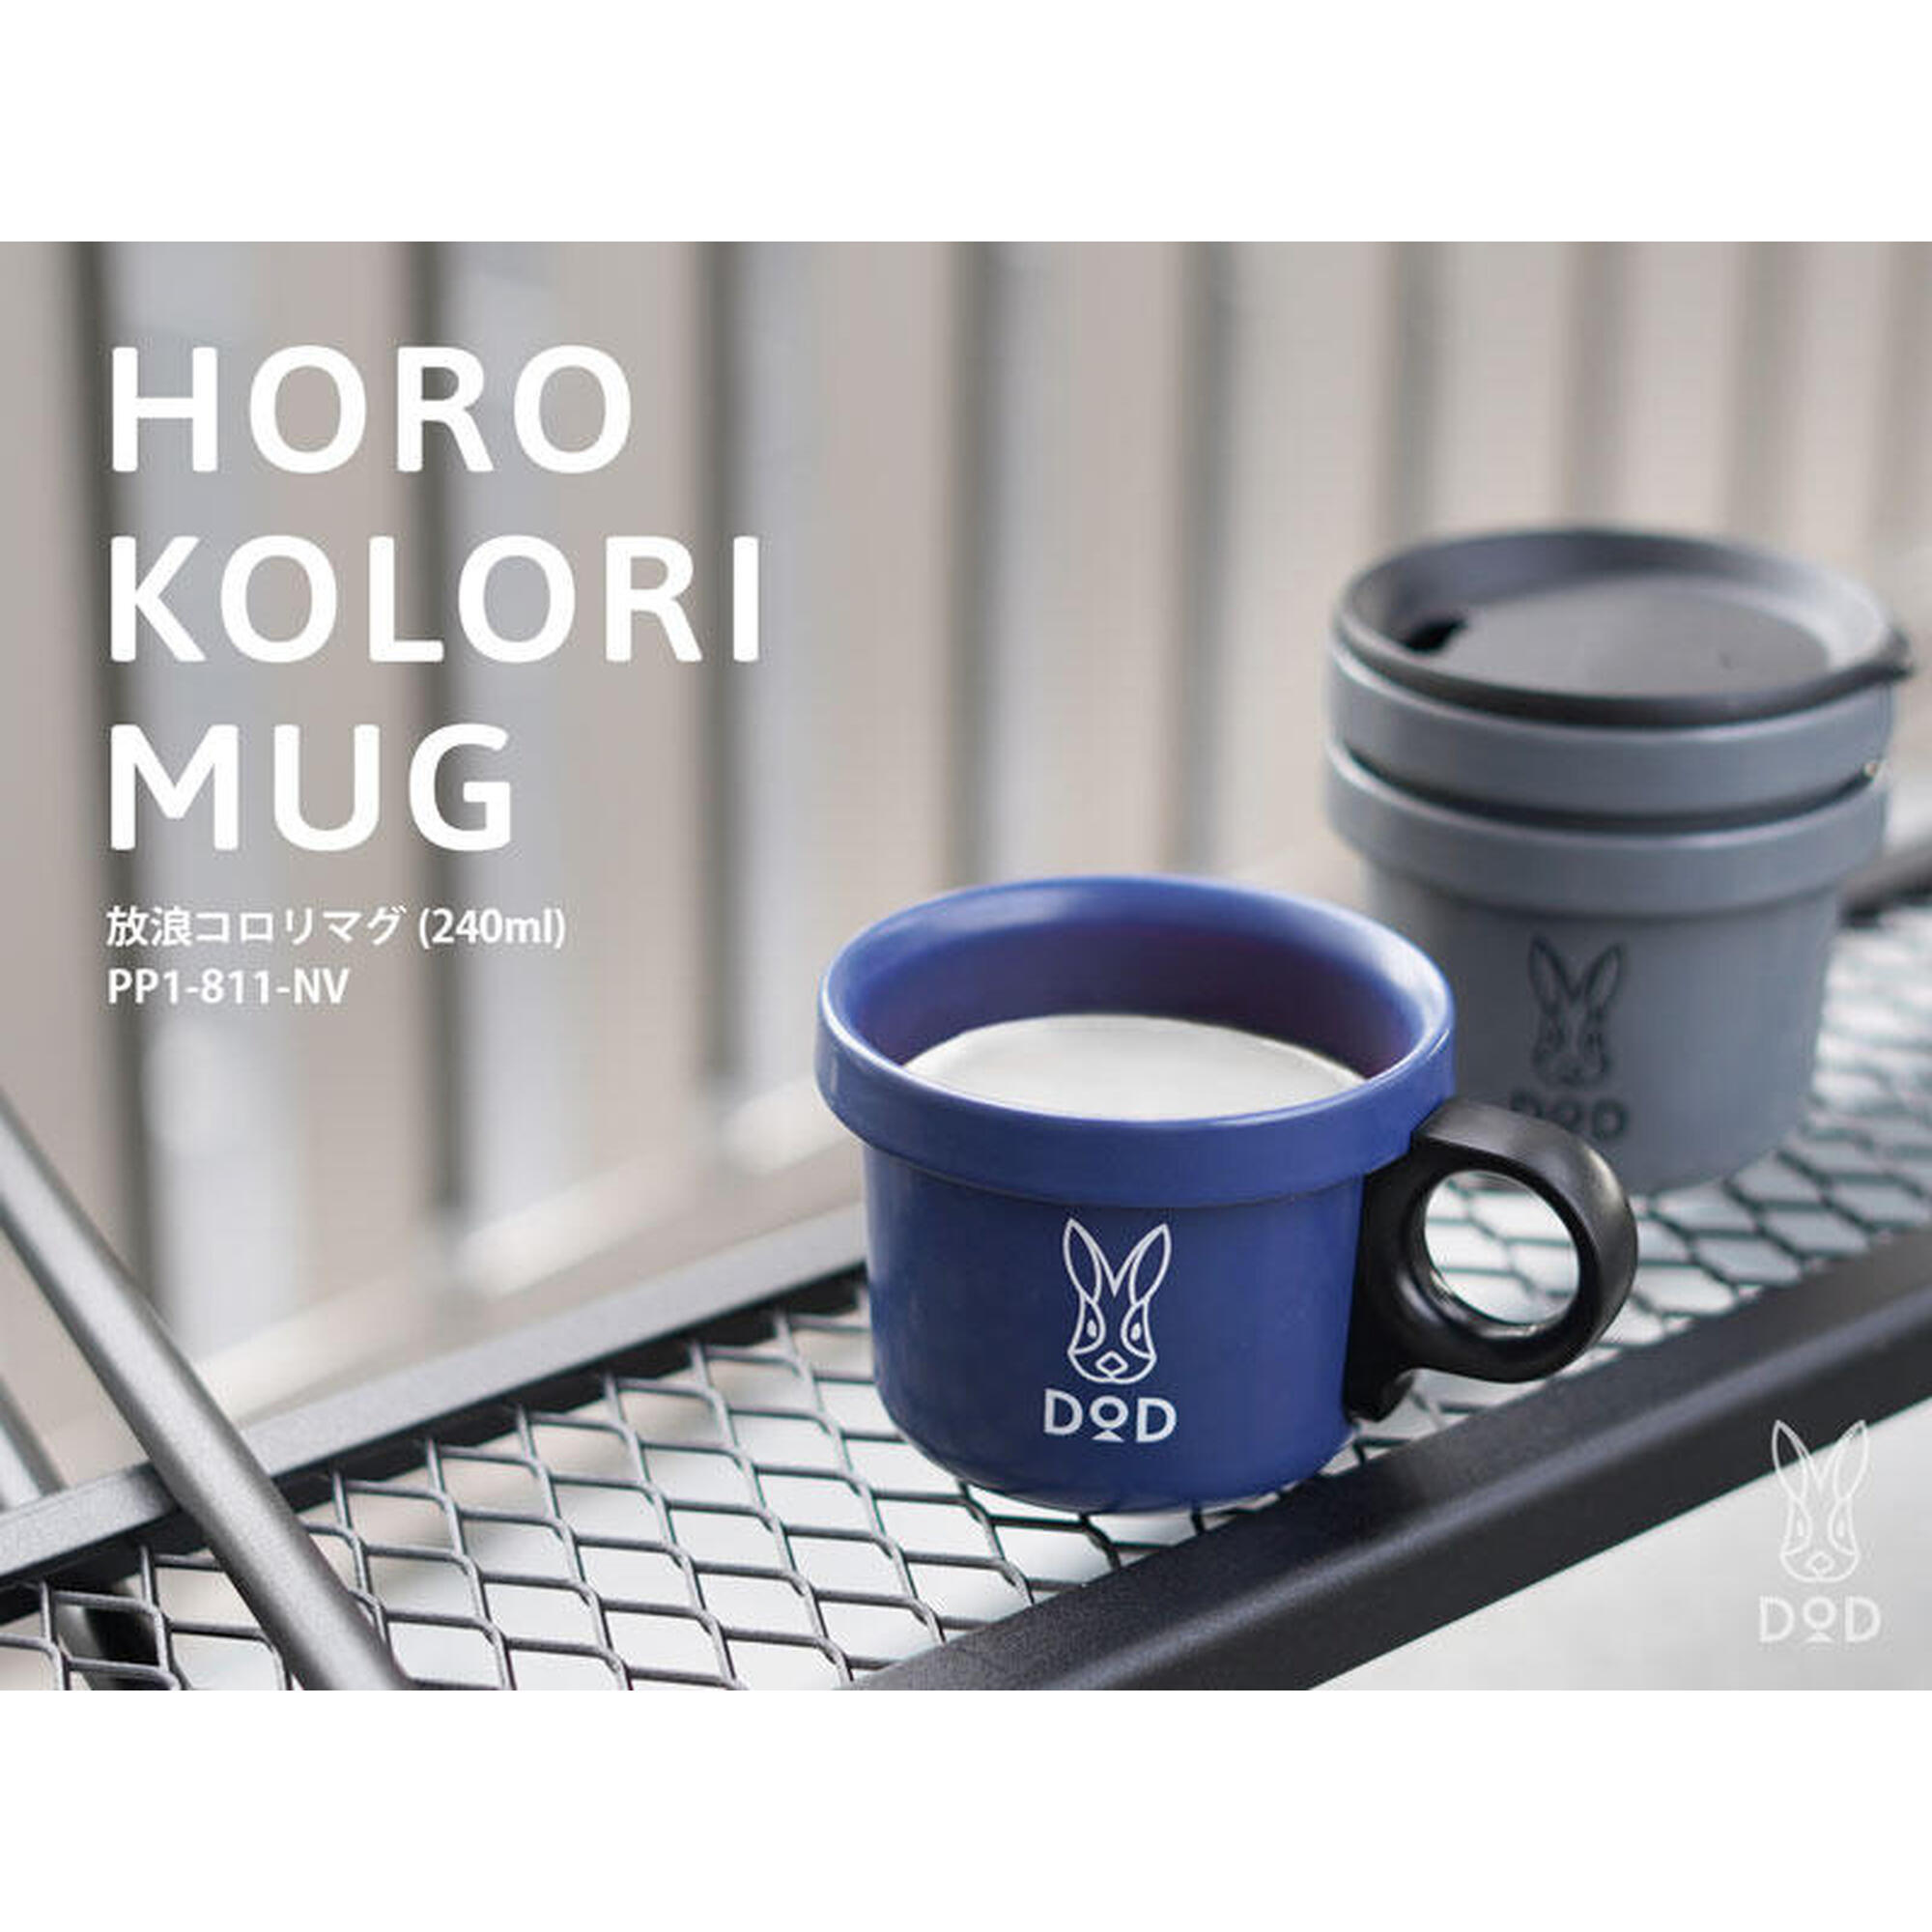 Horo Kolori Camping Mug 240ml - Navy